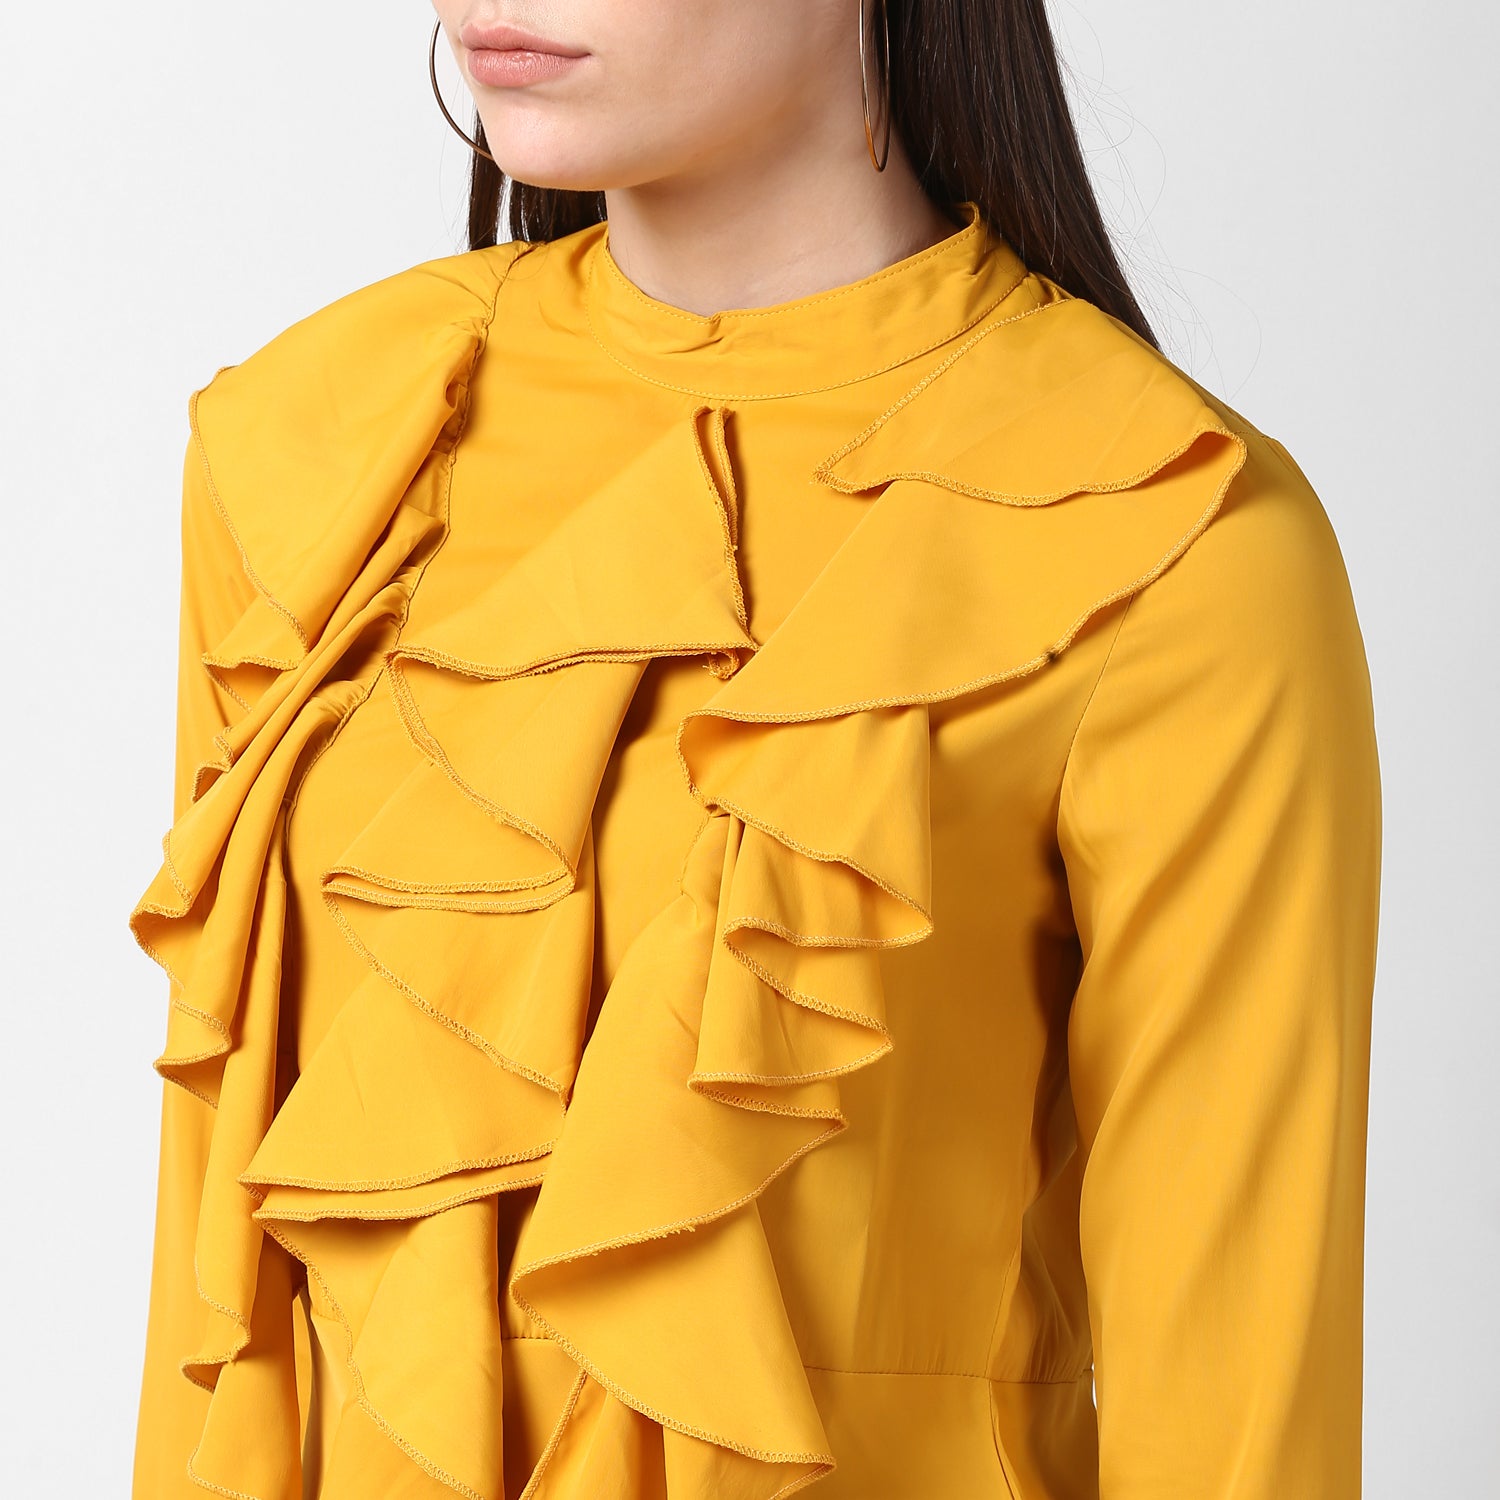 Women's Yellow Front Ruffle Bell Sleeve Dress - StyleStone